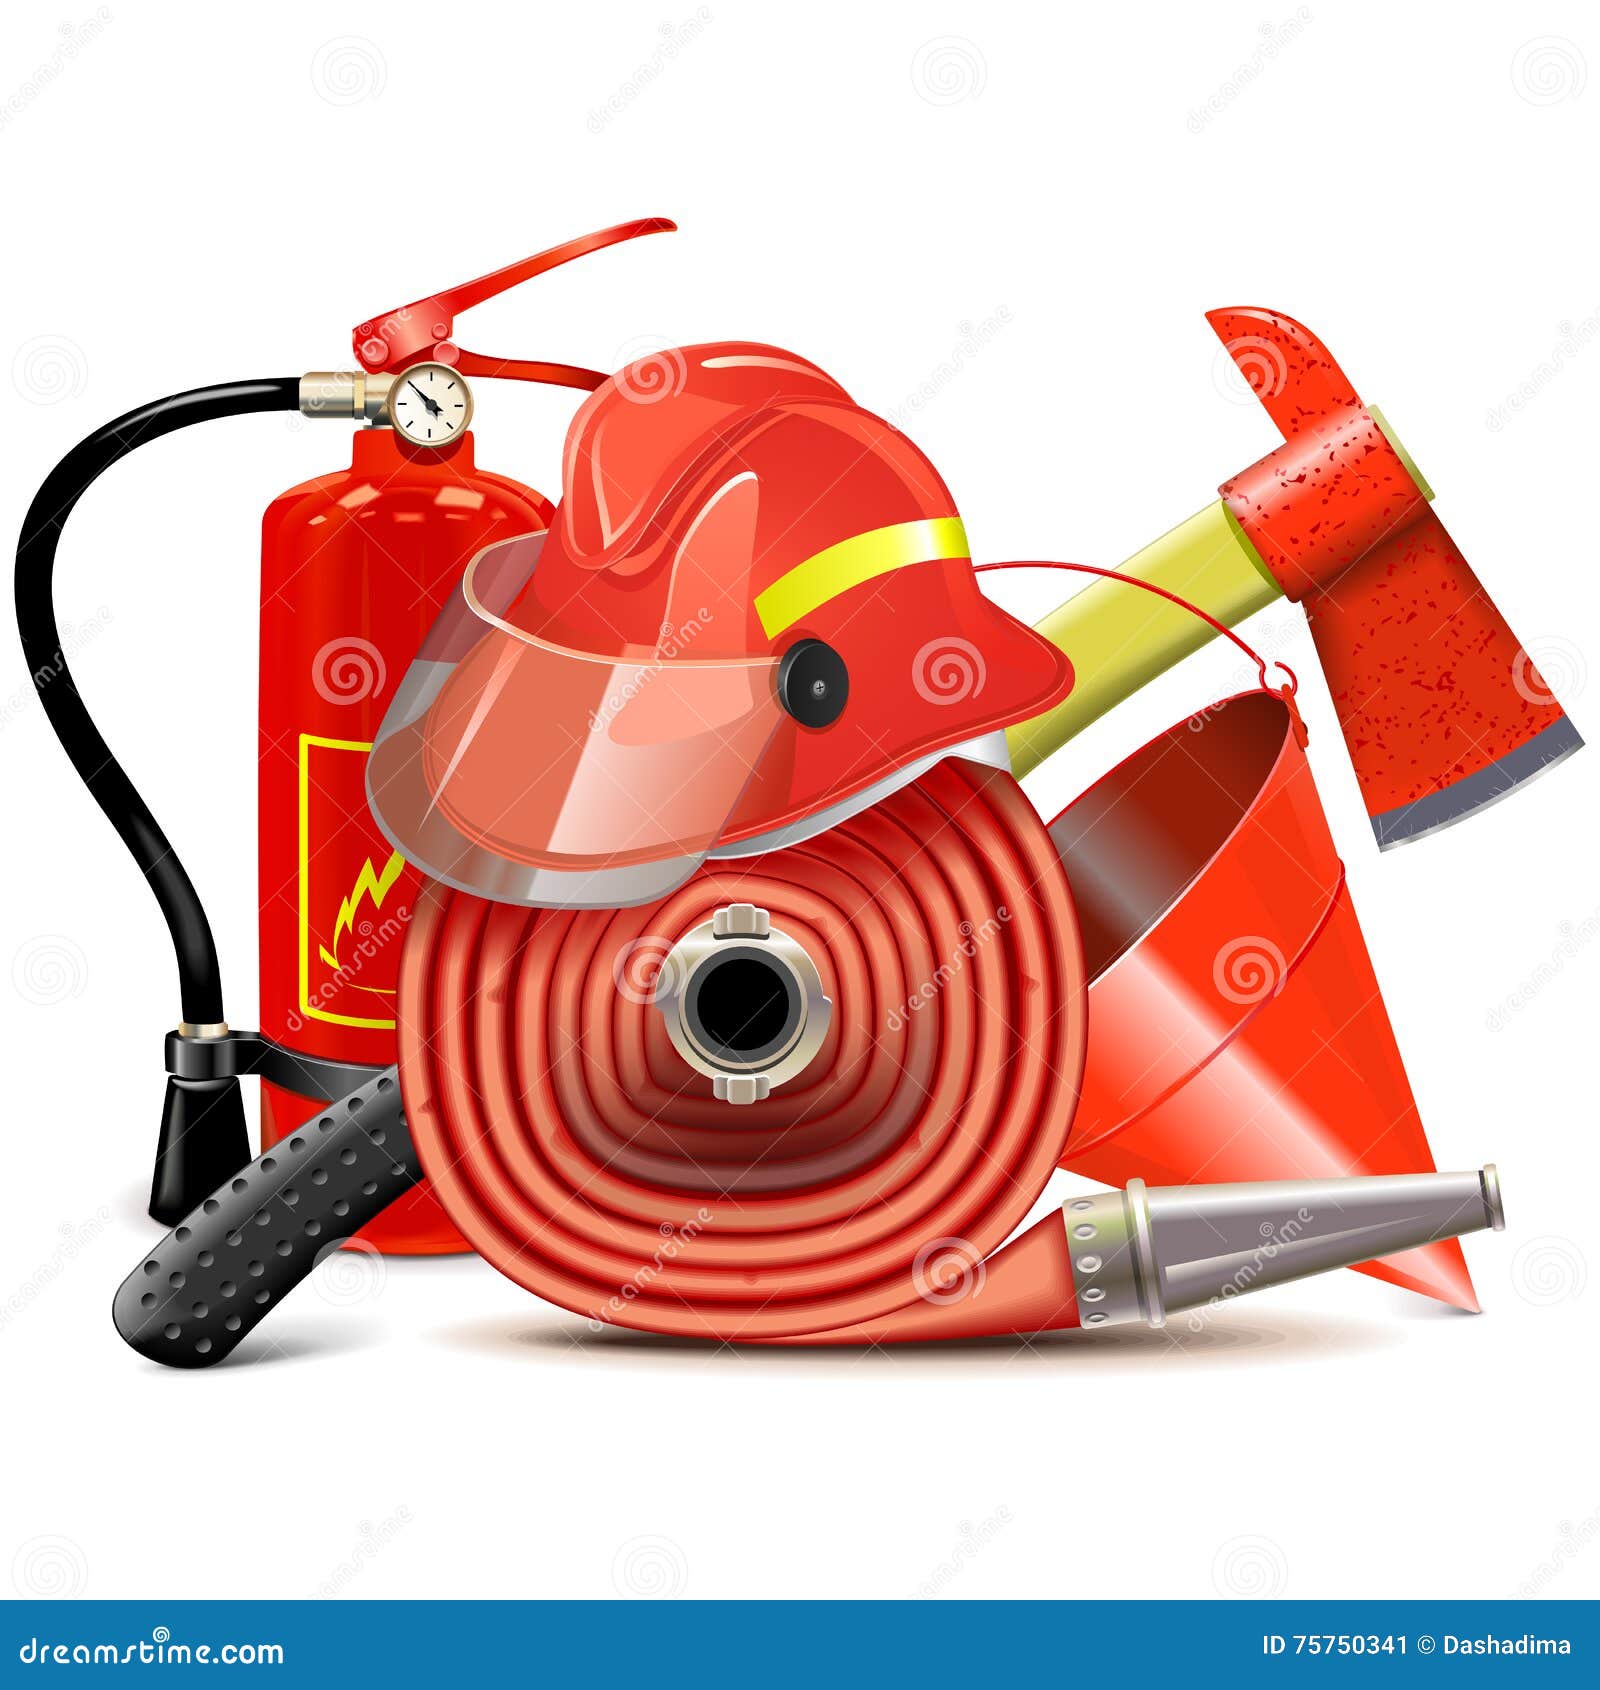  fire prevention equipment concept